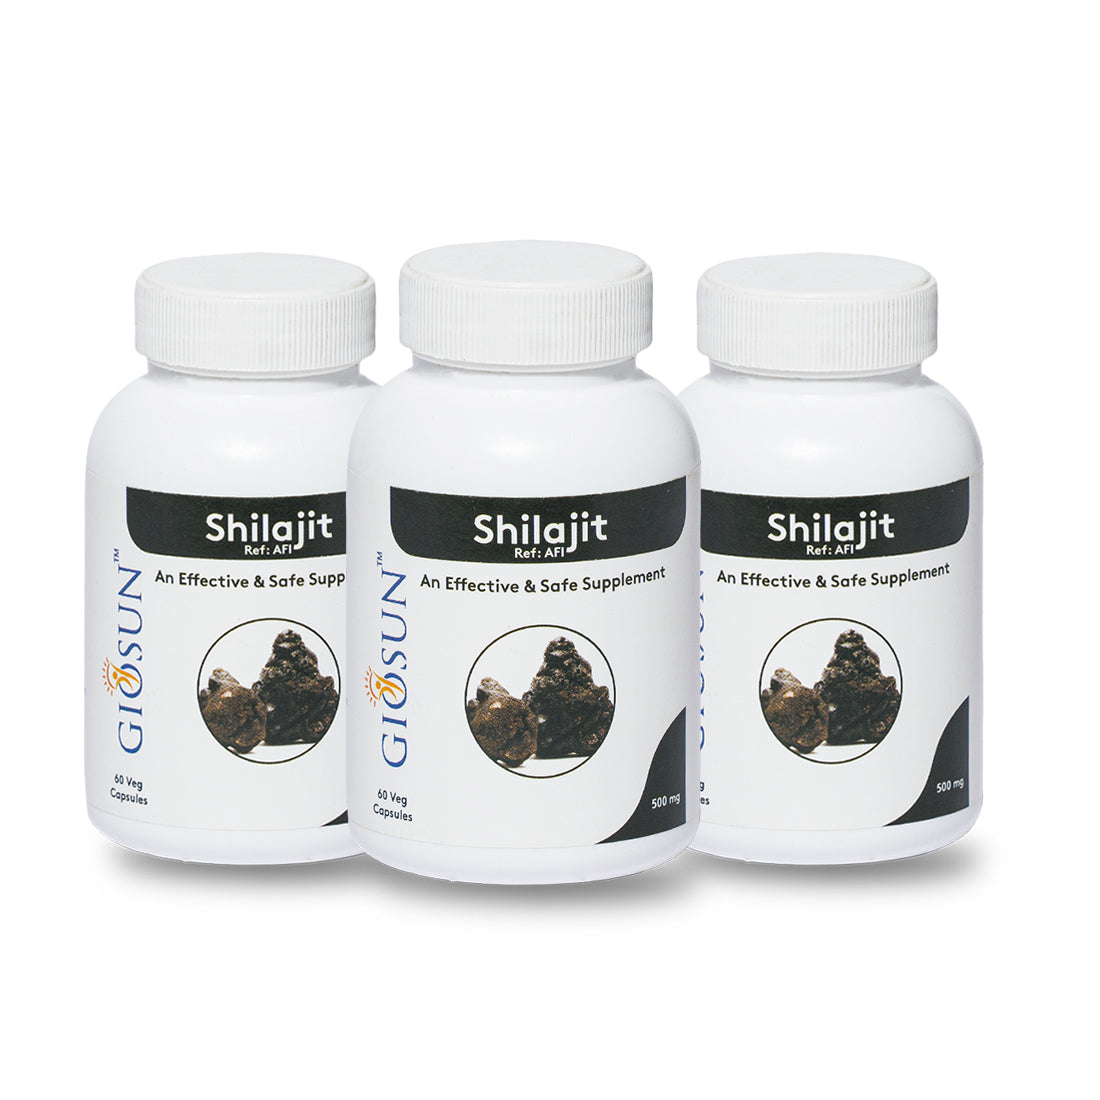 Shilajit Capsules - For Strength, Stamina | increase performance (60 Capsules - 500 mg - Veg)